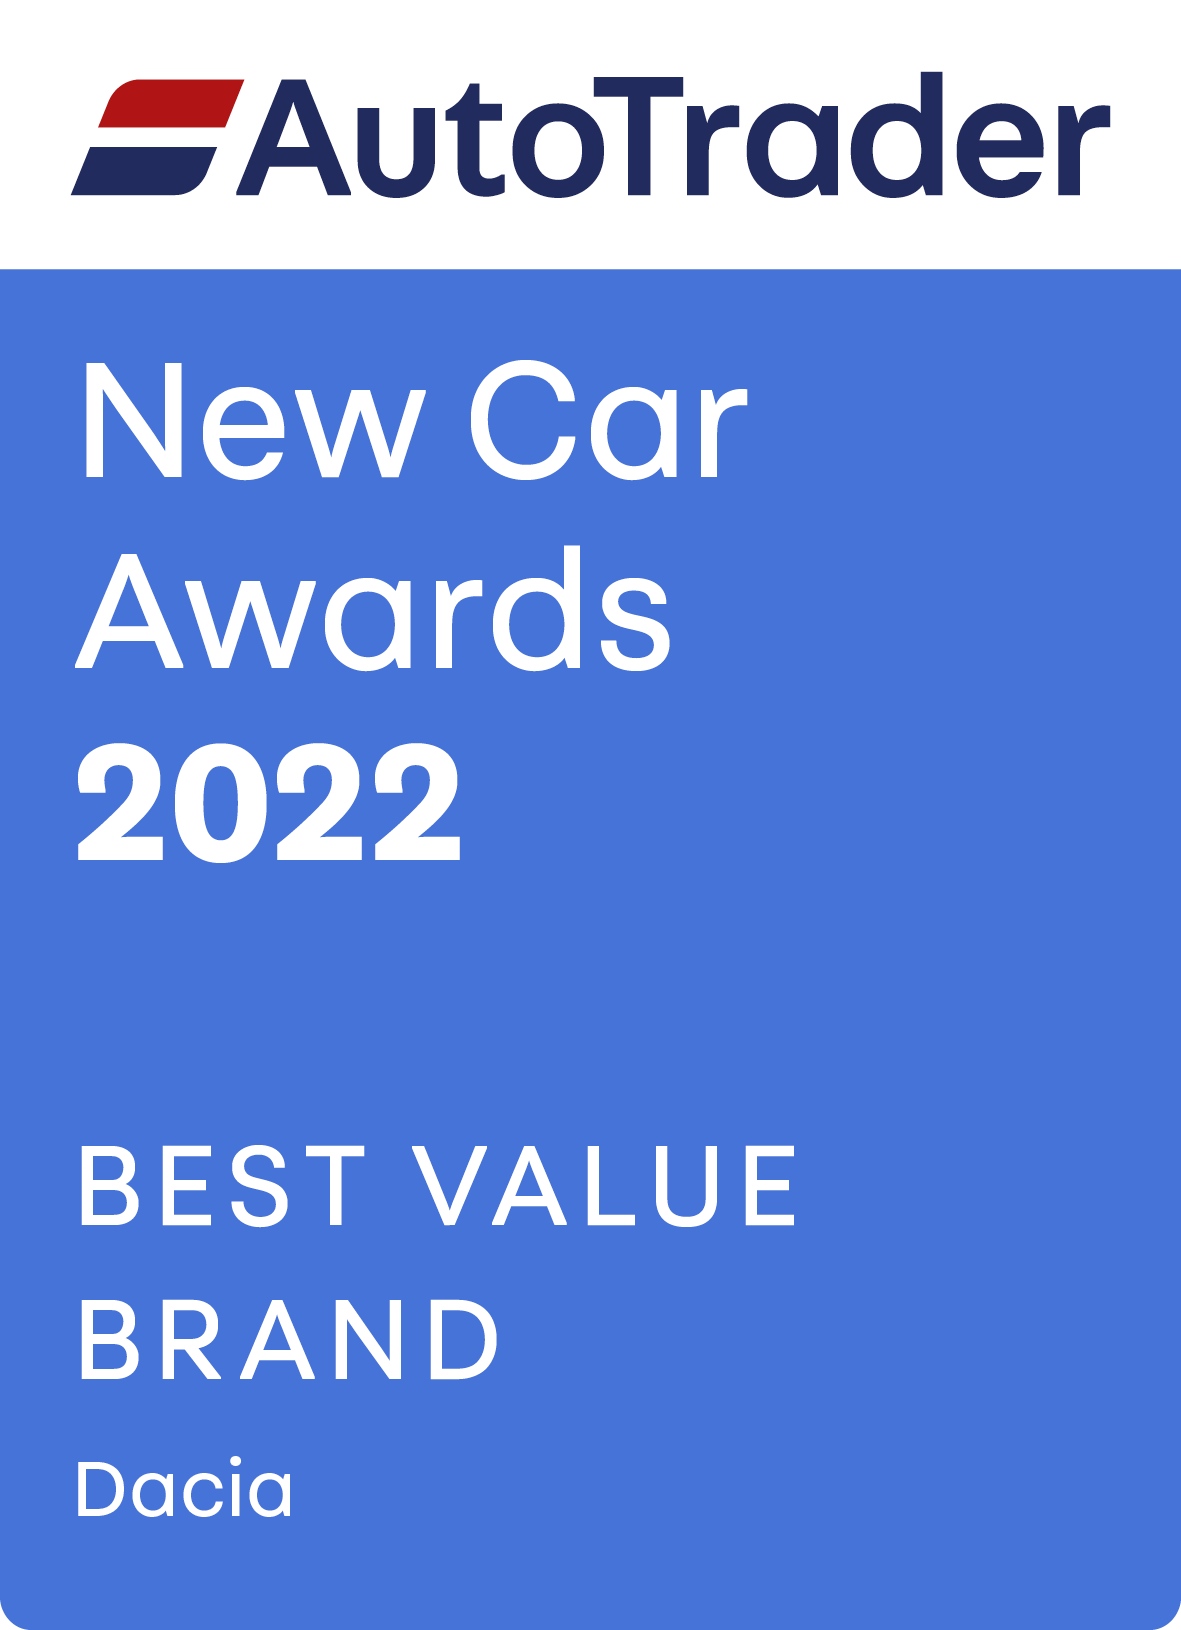 Auto Trader - Best Value Brand - Dacia